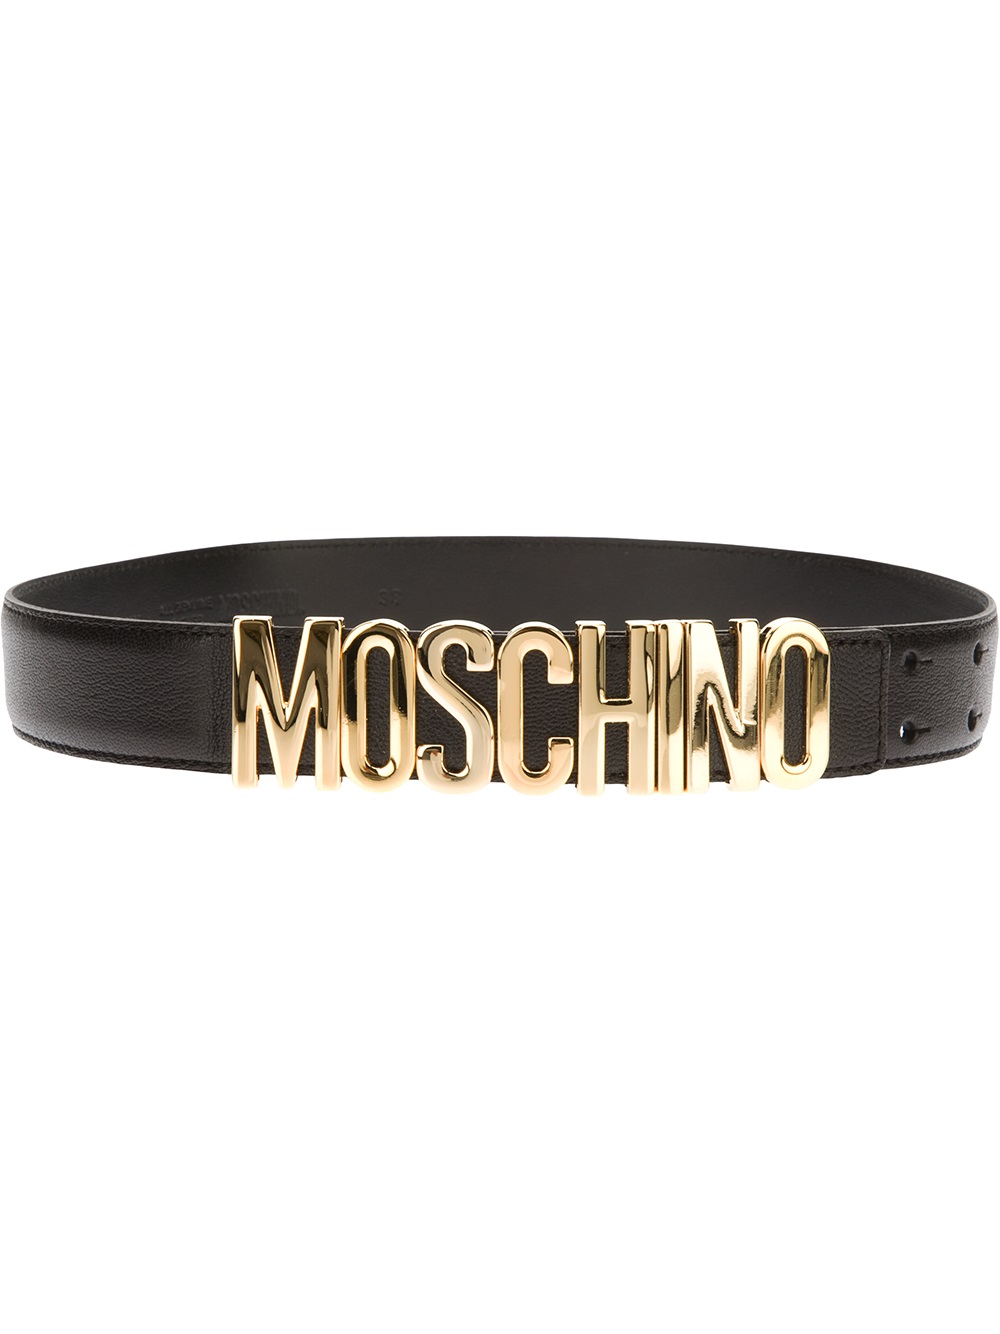 Lyst - Moschino Logo Belt in Black